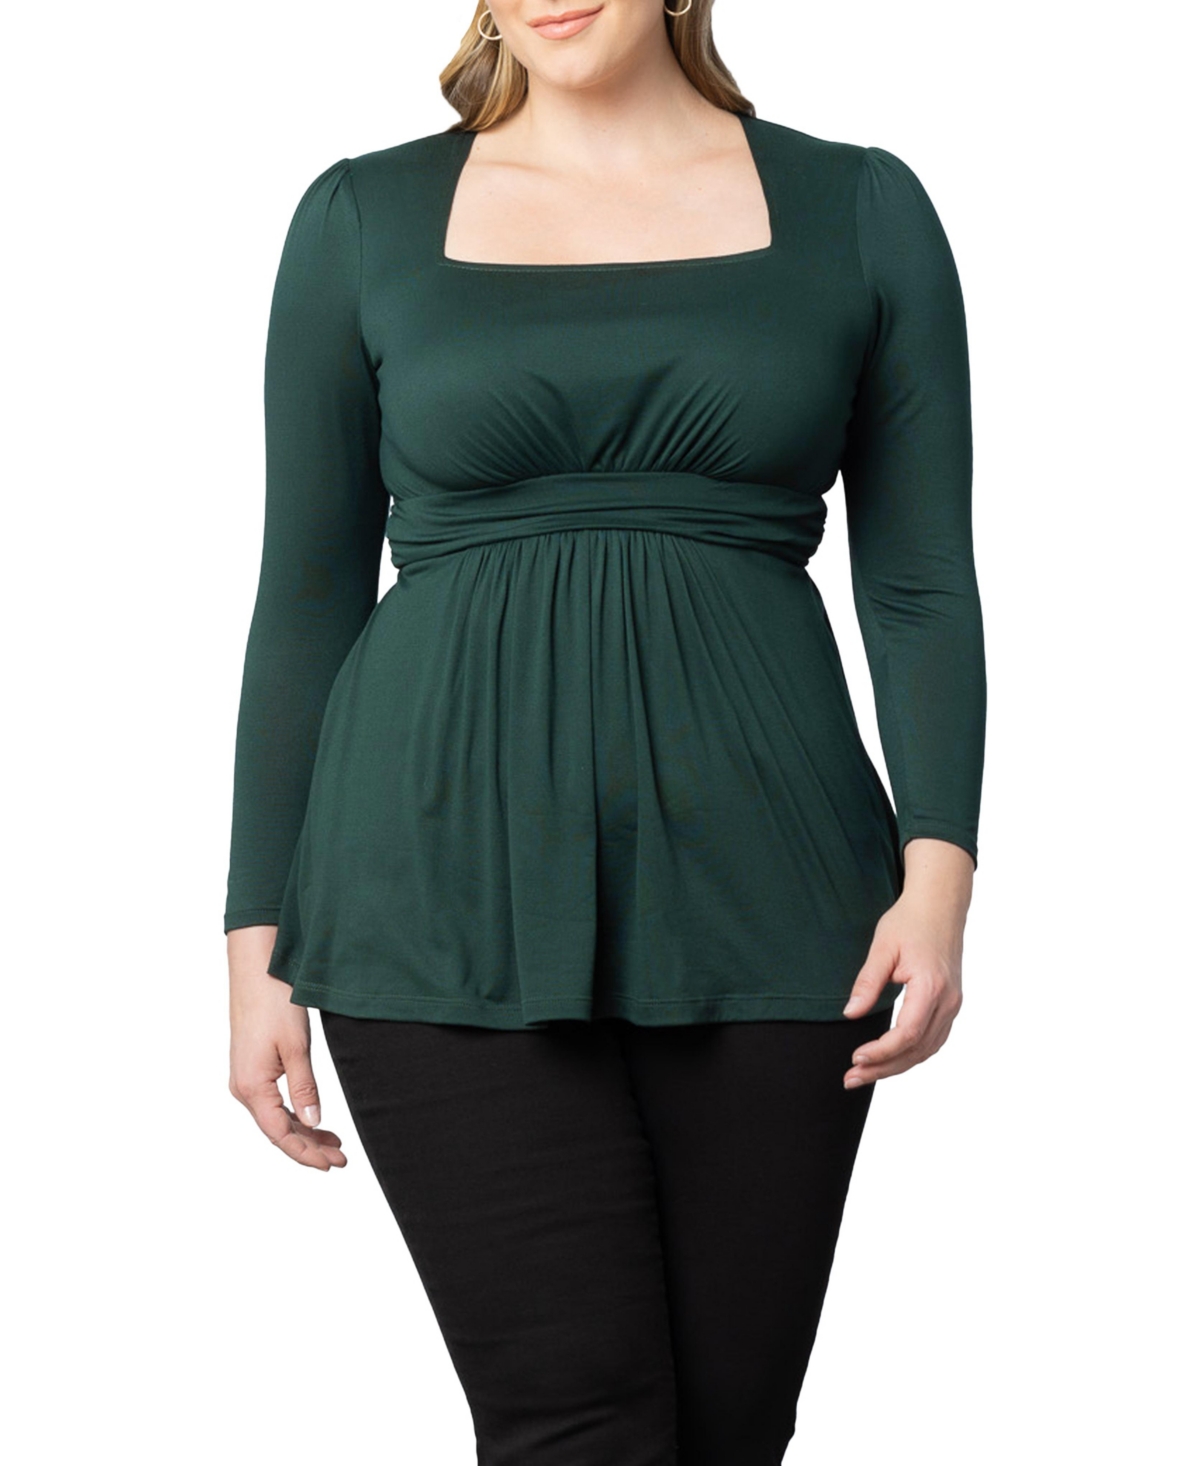 Women's Plus Size Delilah Long Sleeve Top - Hunter green